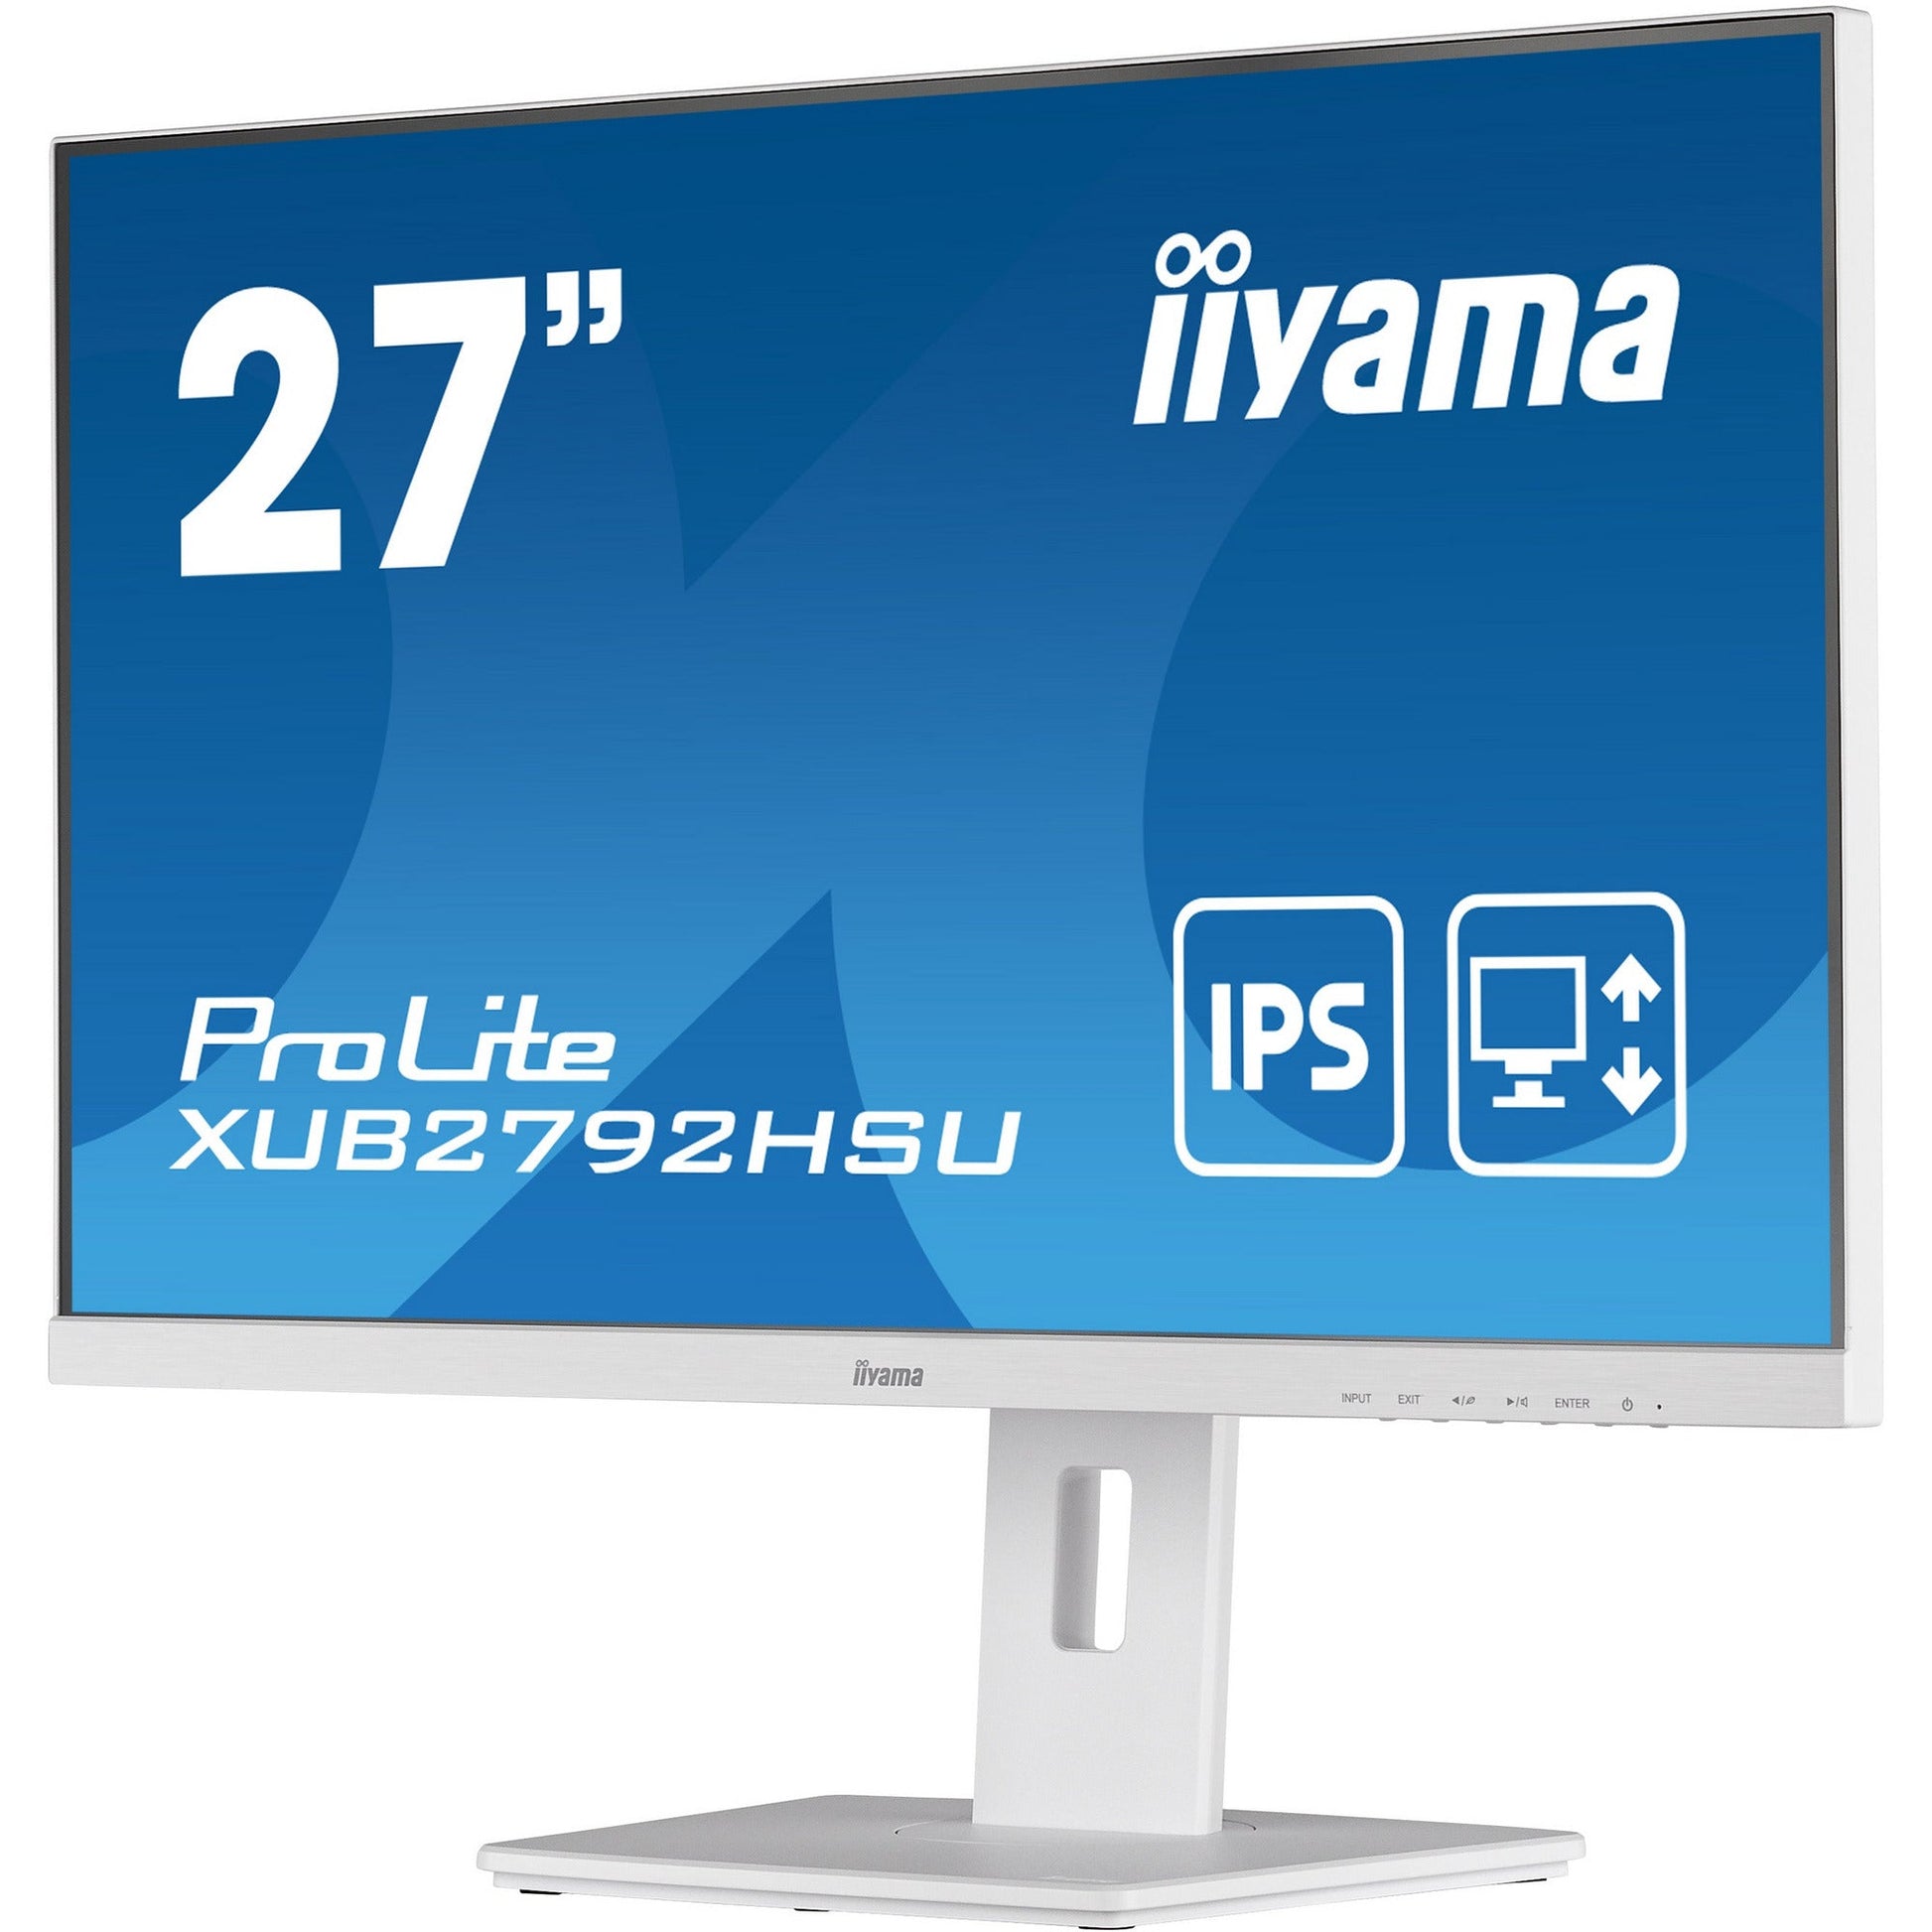 Steel Blue Iiyama ProLite XUB2792HSU-W5 27” IPS Monitor with Height Adjust Stand in White